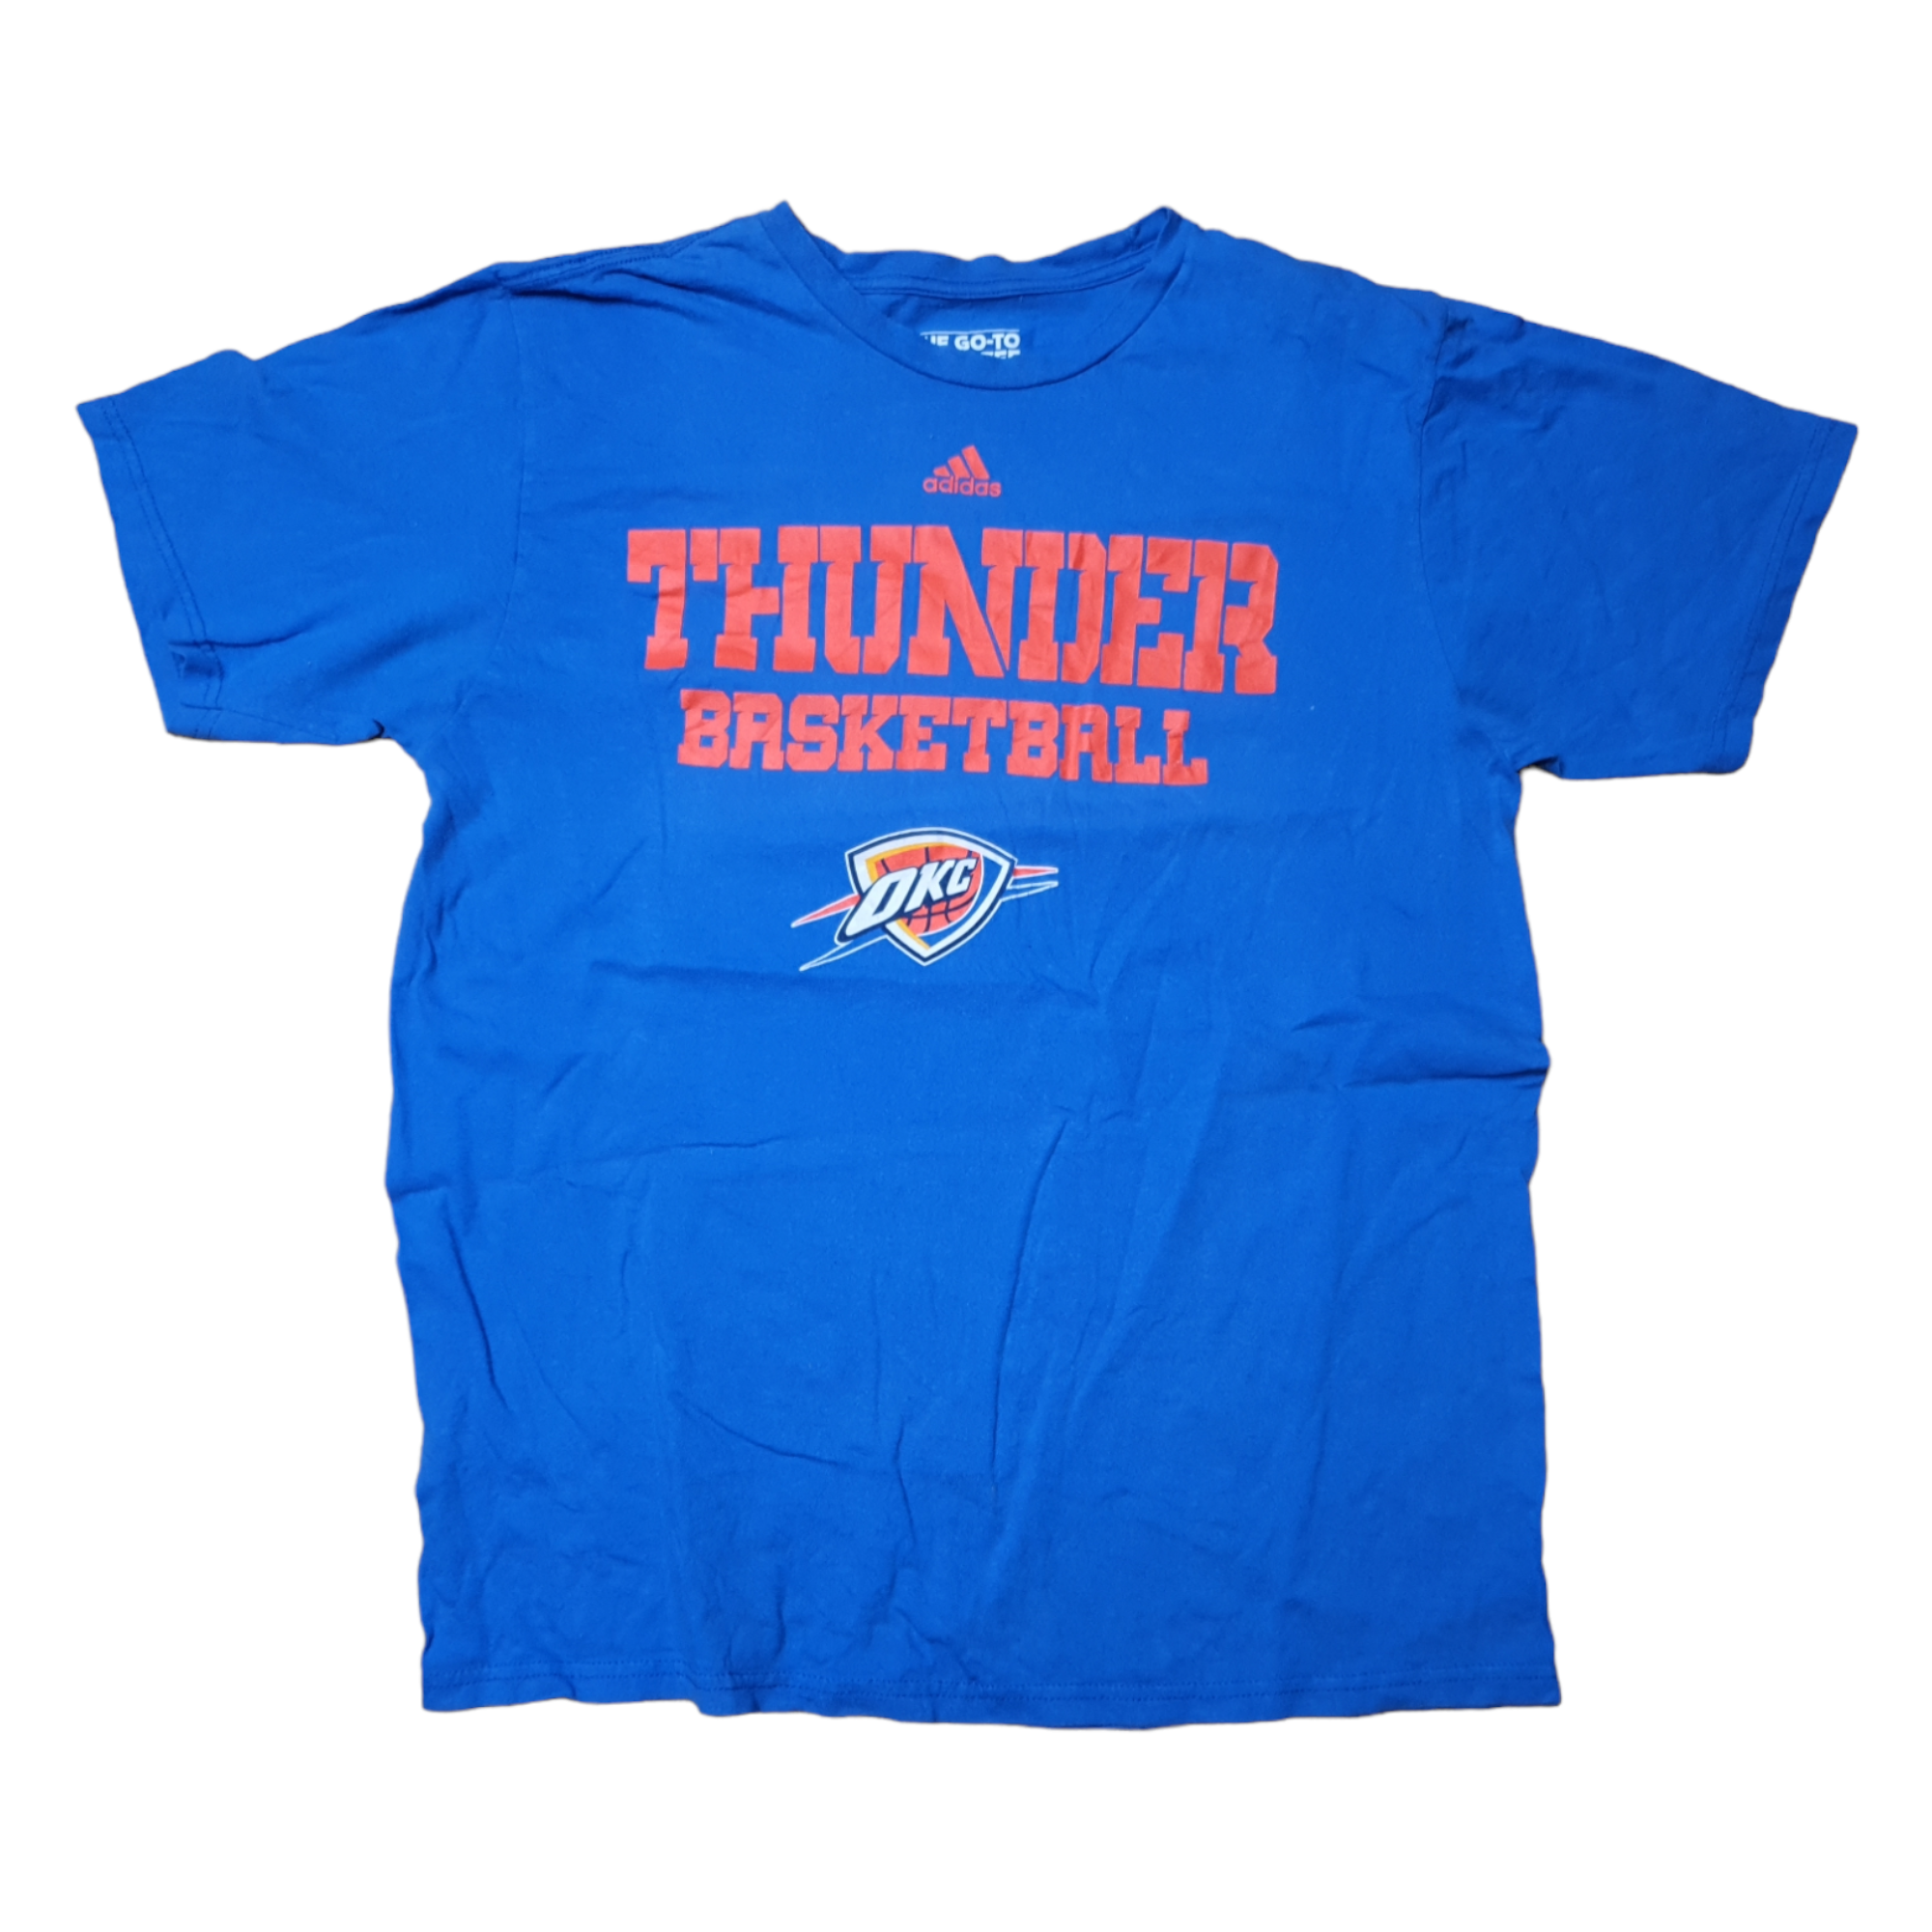 [L] Adidas Thunder Basketball T-Shirt